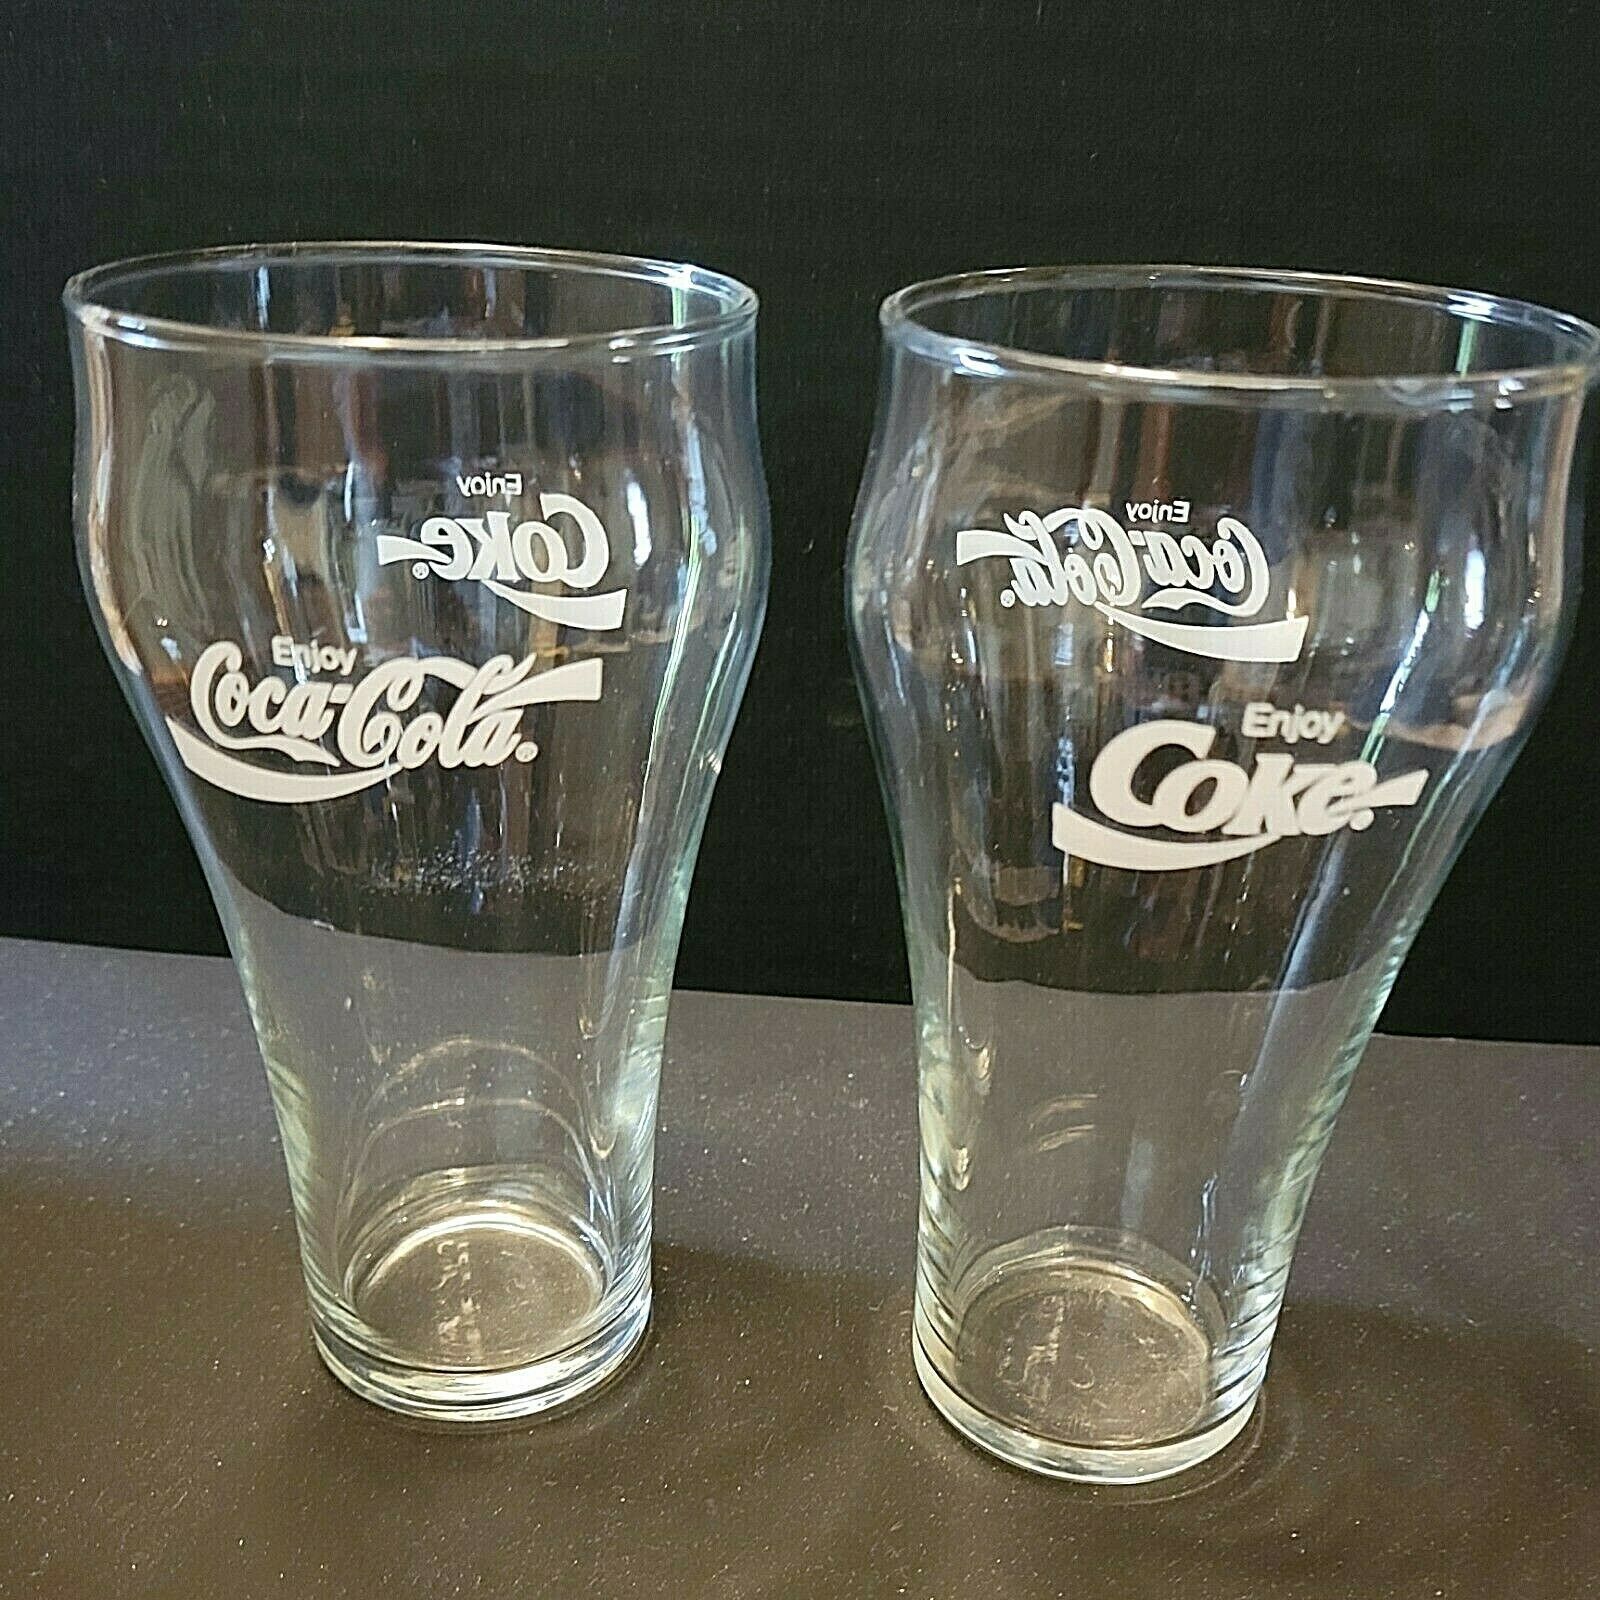 Primary image for 2 6" COKE GLASSES "ENJOY COCA-COLA"